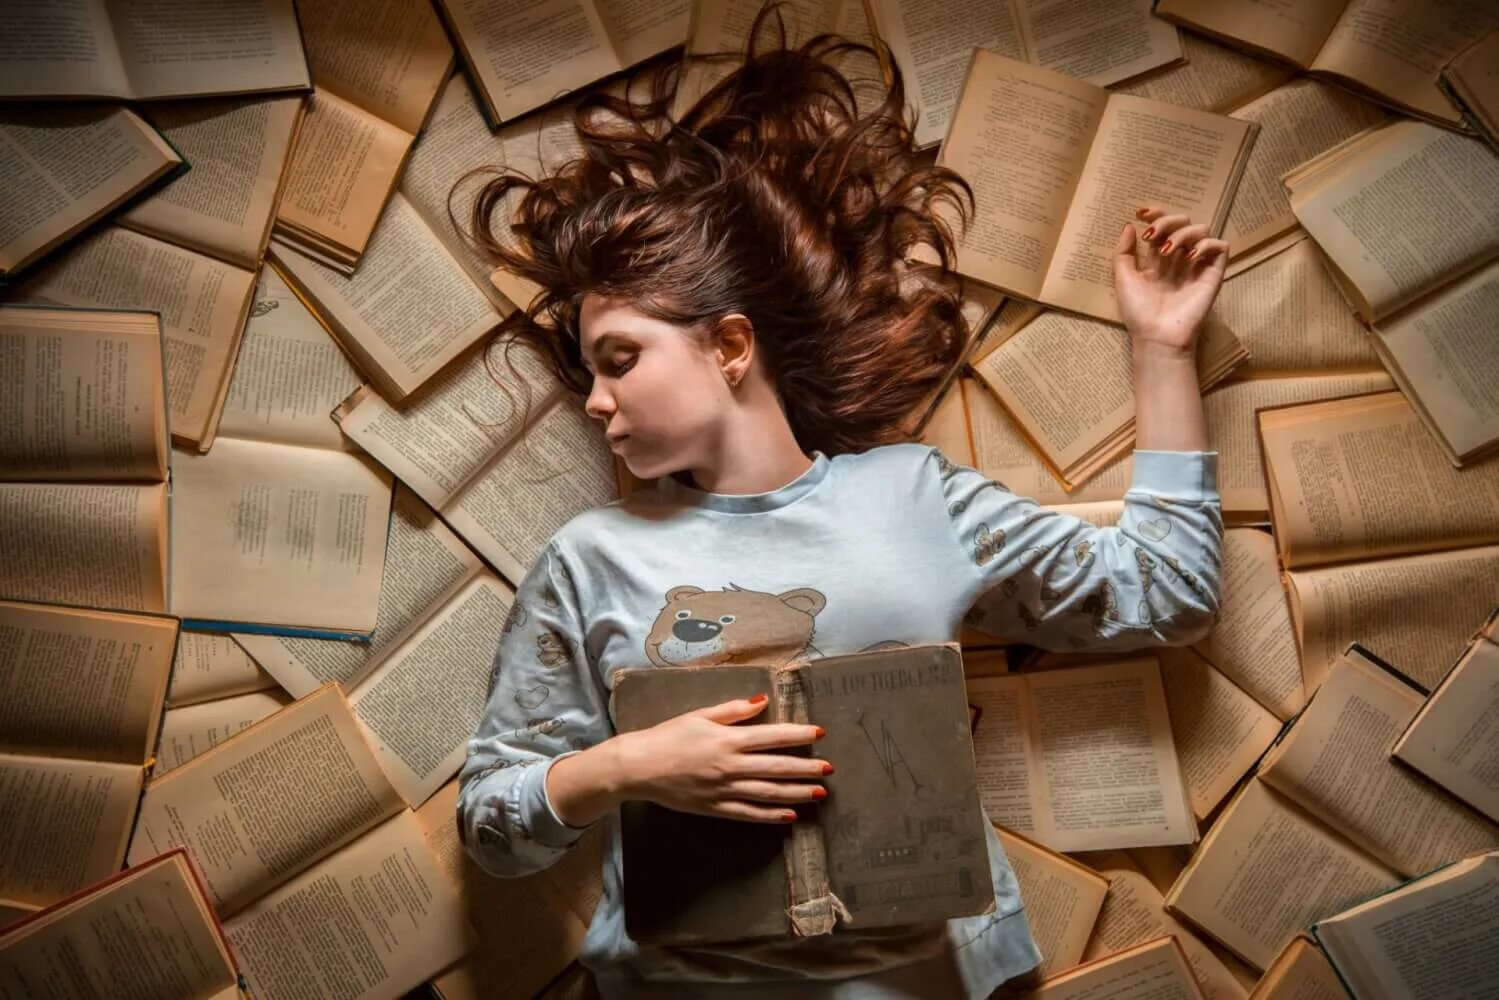 Creative reading. Девушка с книгой. Фотосессия с книгой. Фотосессия на фоне книг. Творческая фотосессия.